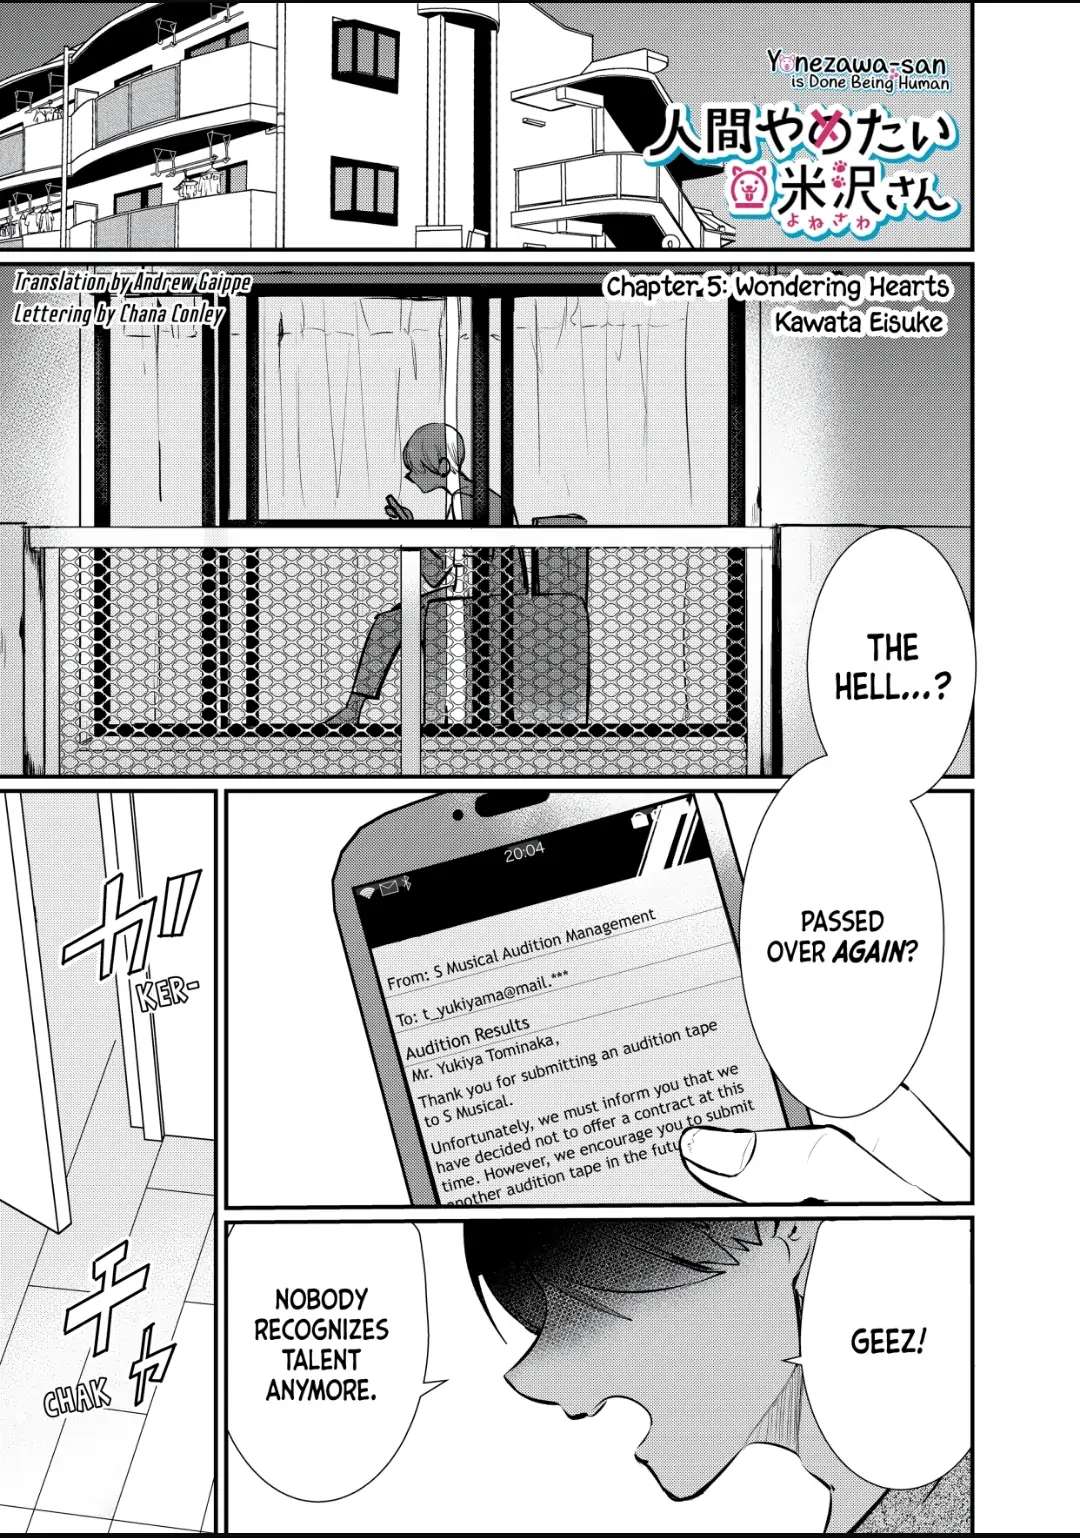 Yonezawa-San Is Done Being Human - Page 2